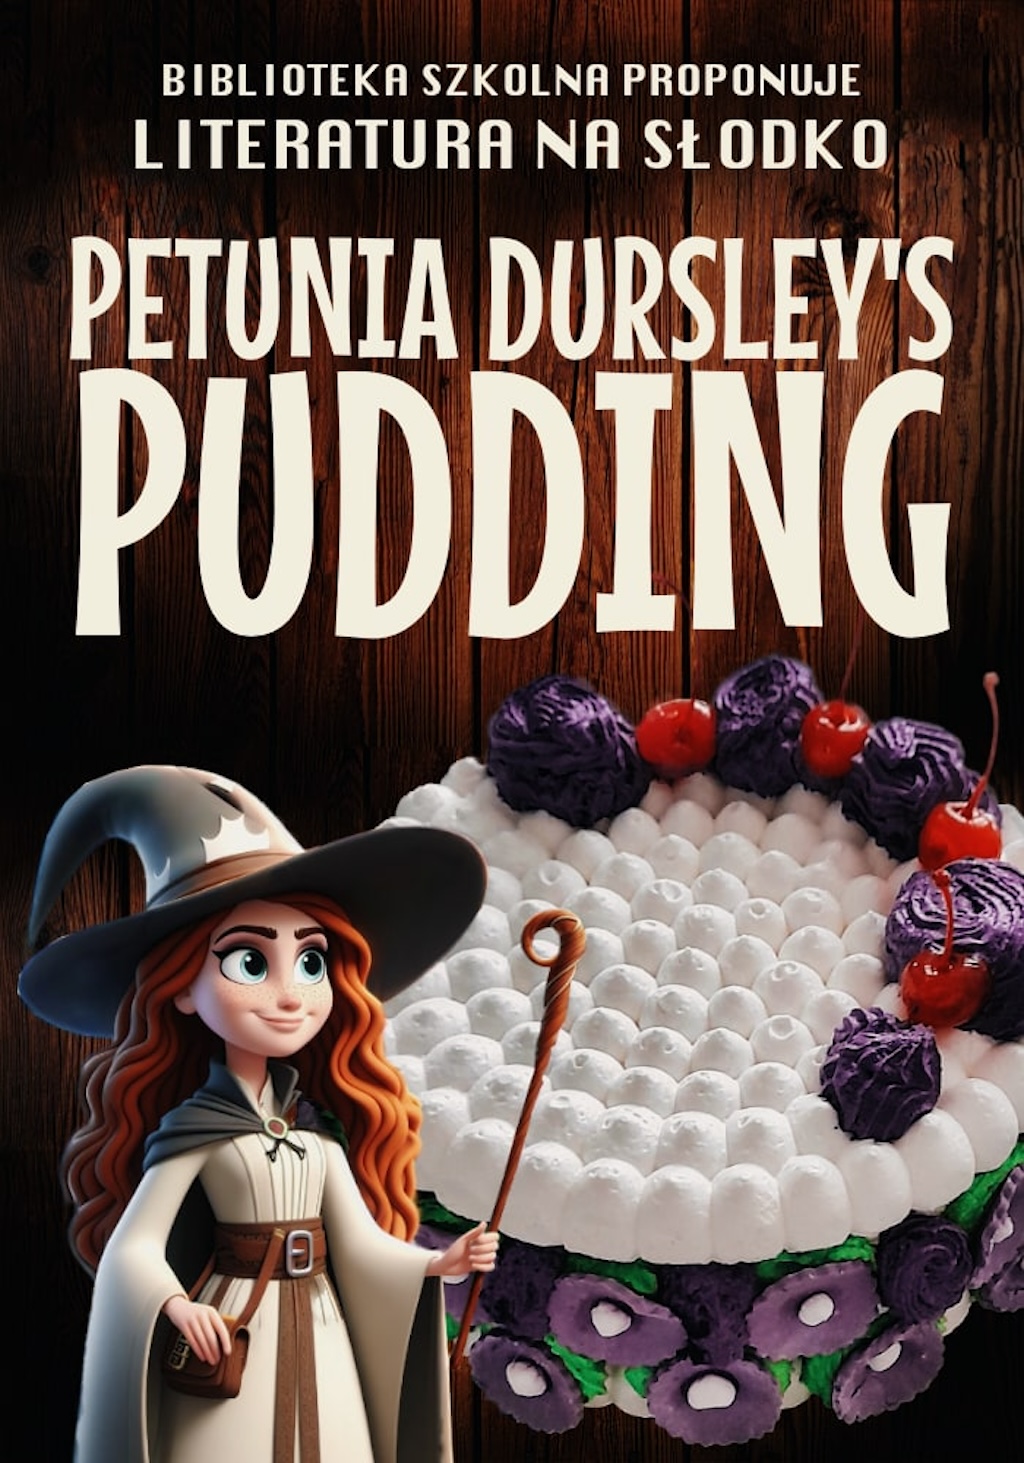 PETUNIA DURSLEY'S PUDDING